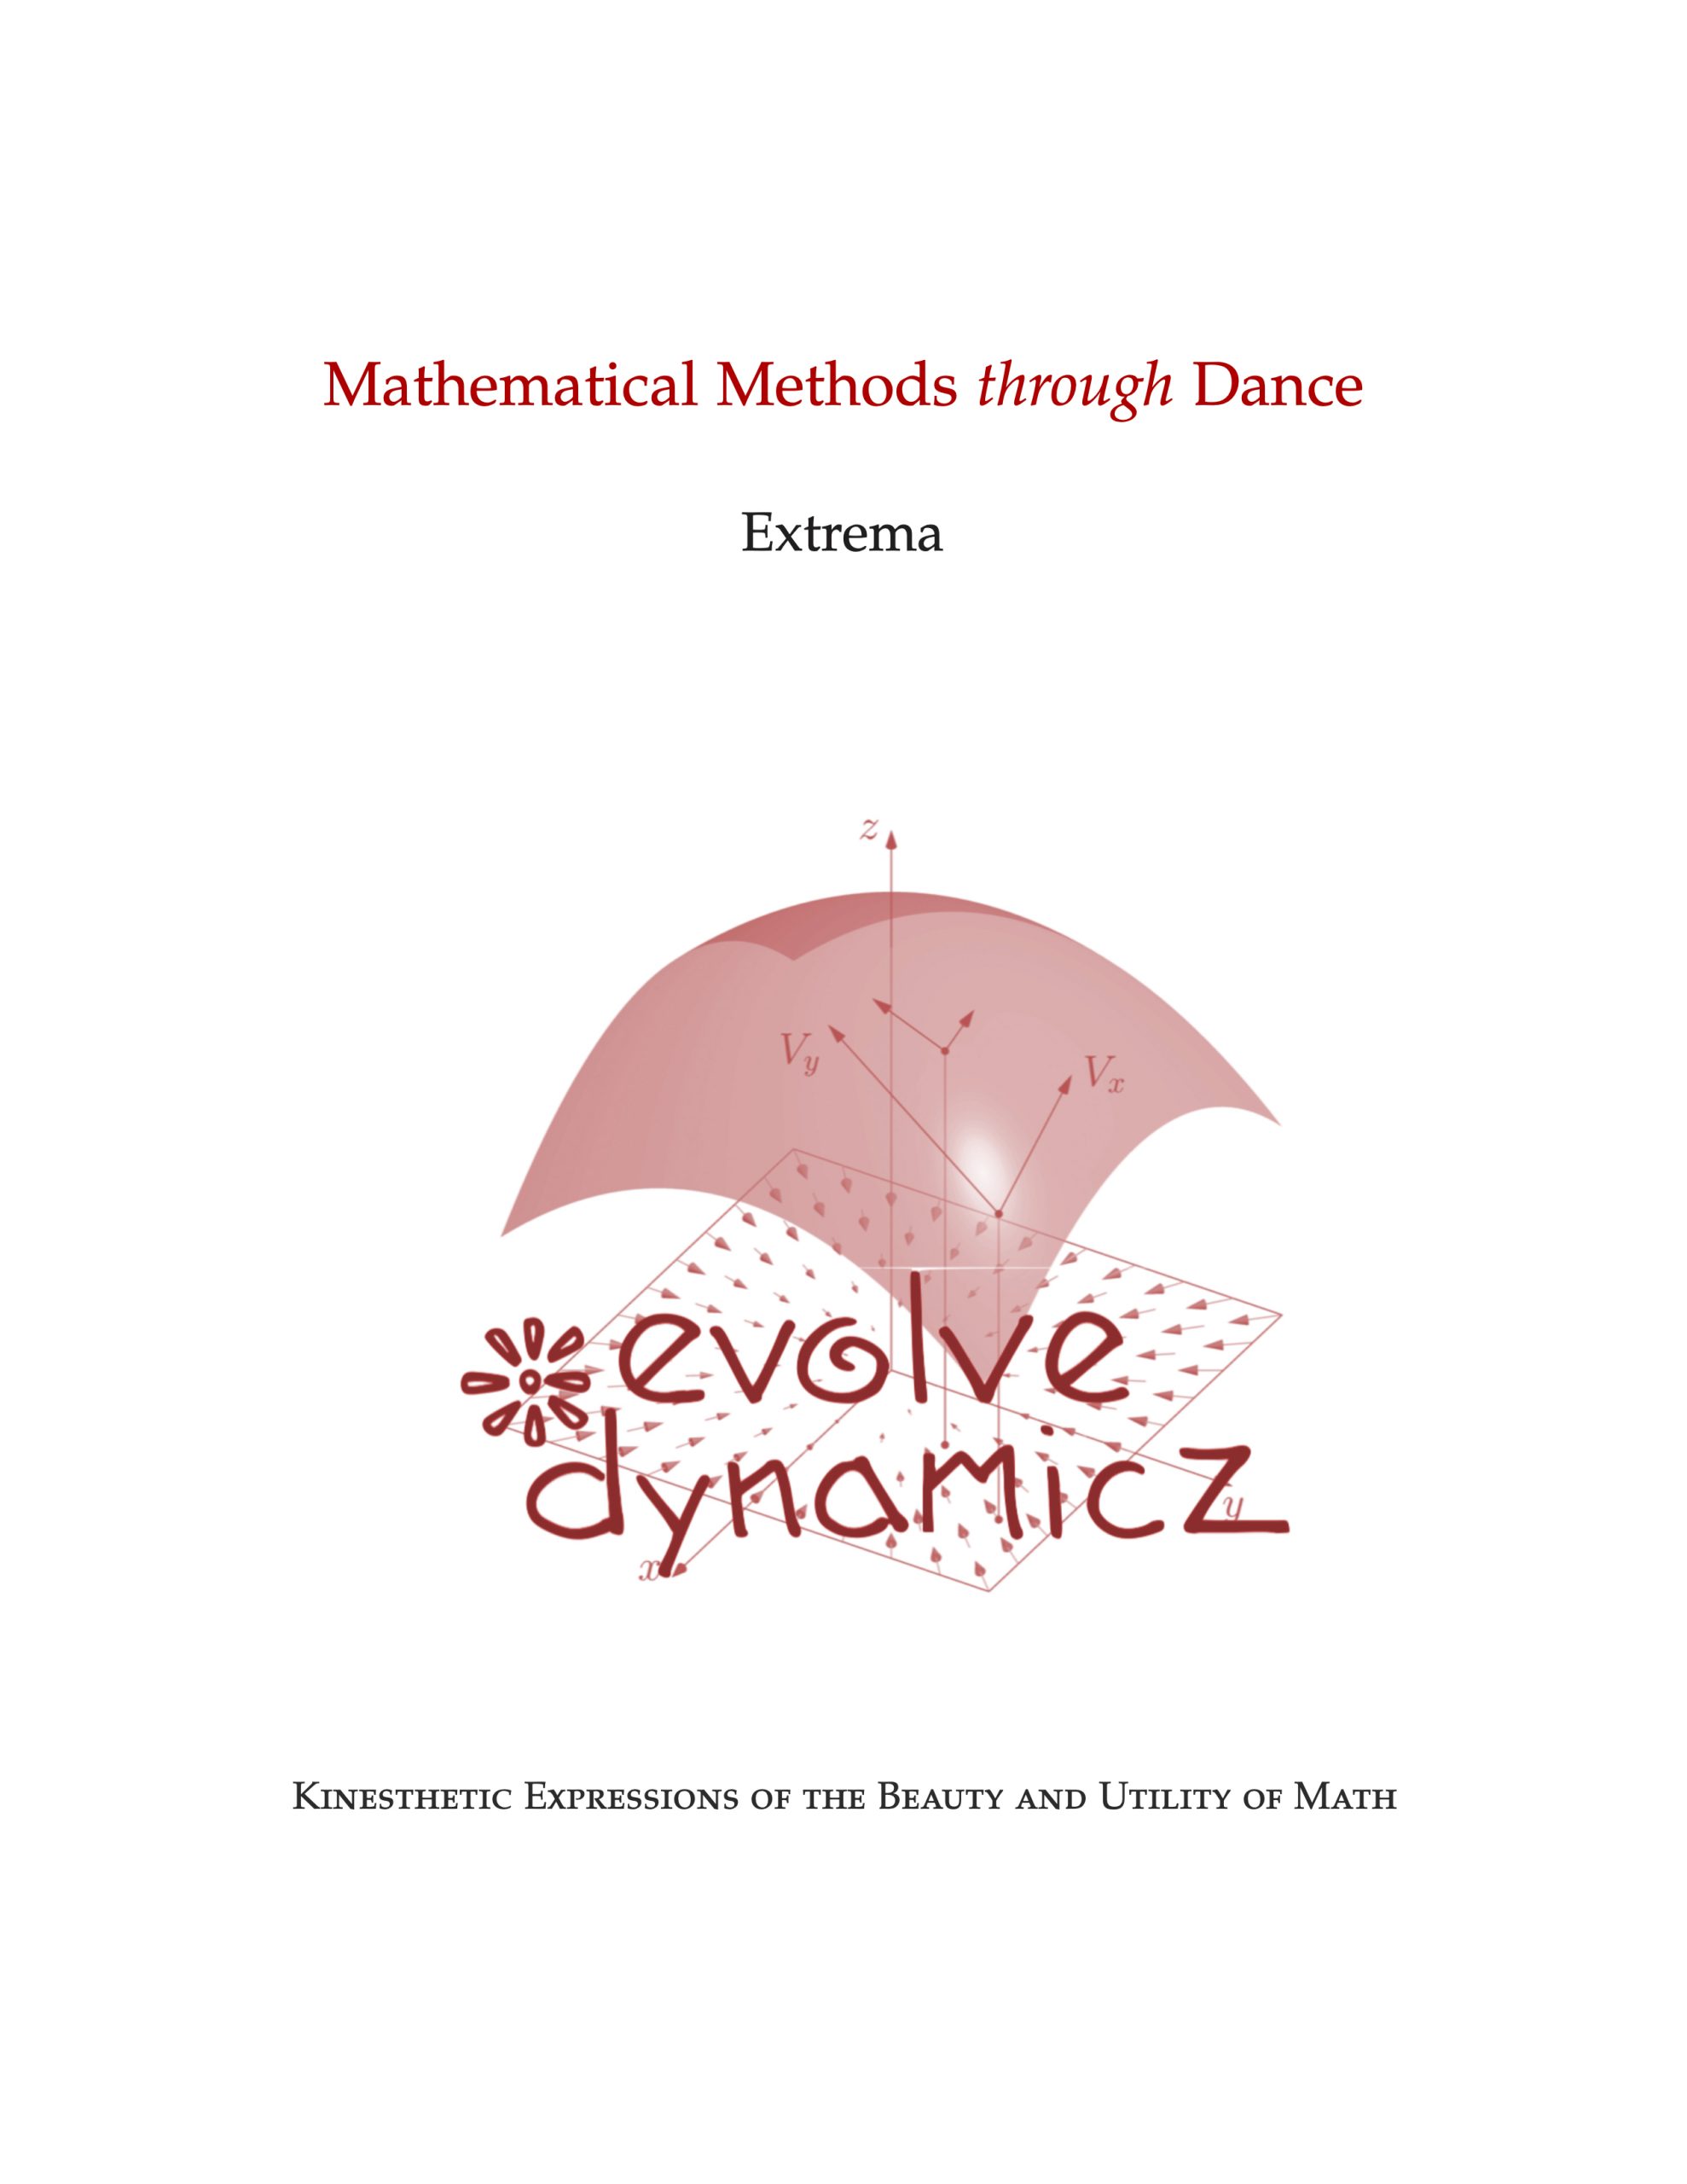 Evolve Dynamicz Extrema Brochure